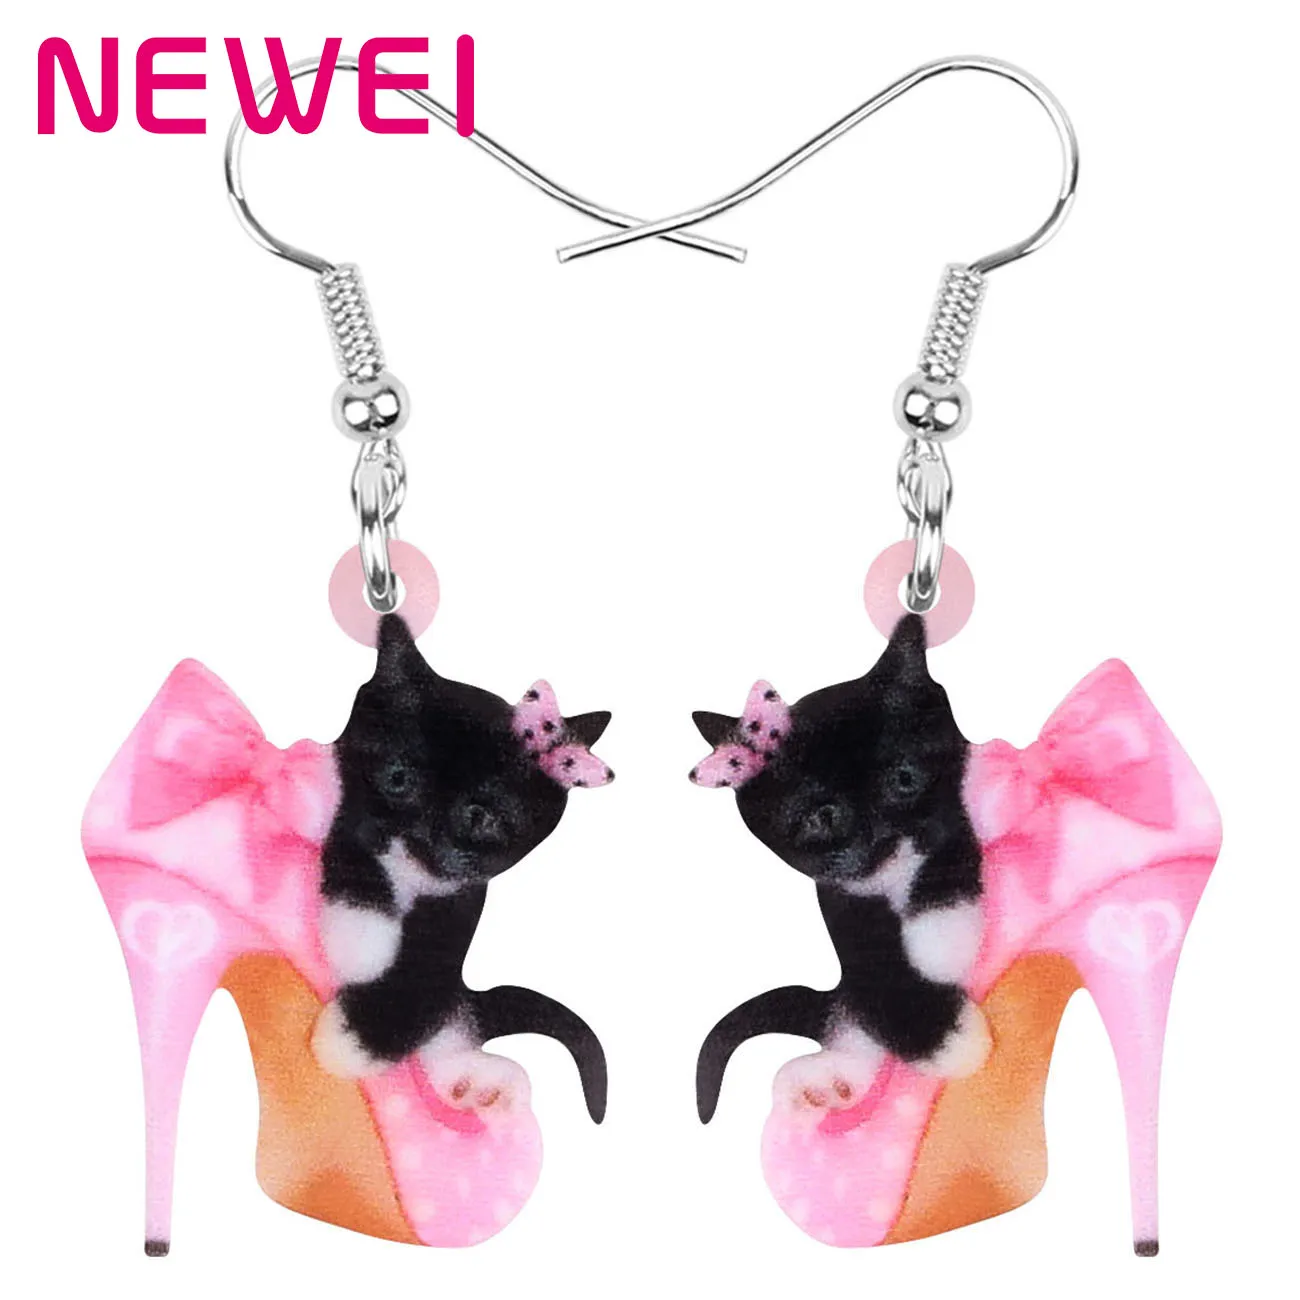 

NEWEI Valentine's Day Acrylic Pink High Heels Cat Kitten Earrings Drop Dangle Jewelry For Women Girls Charm Gifts, Multicolor